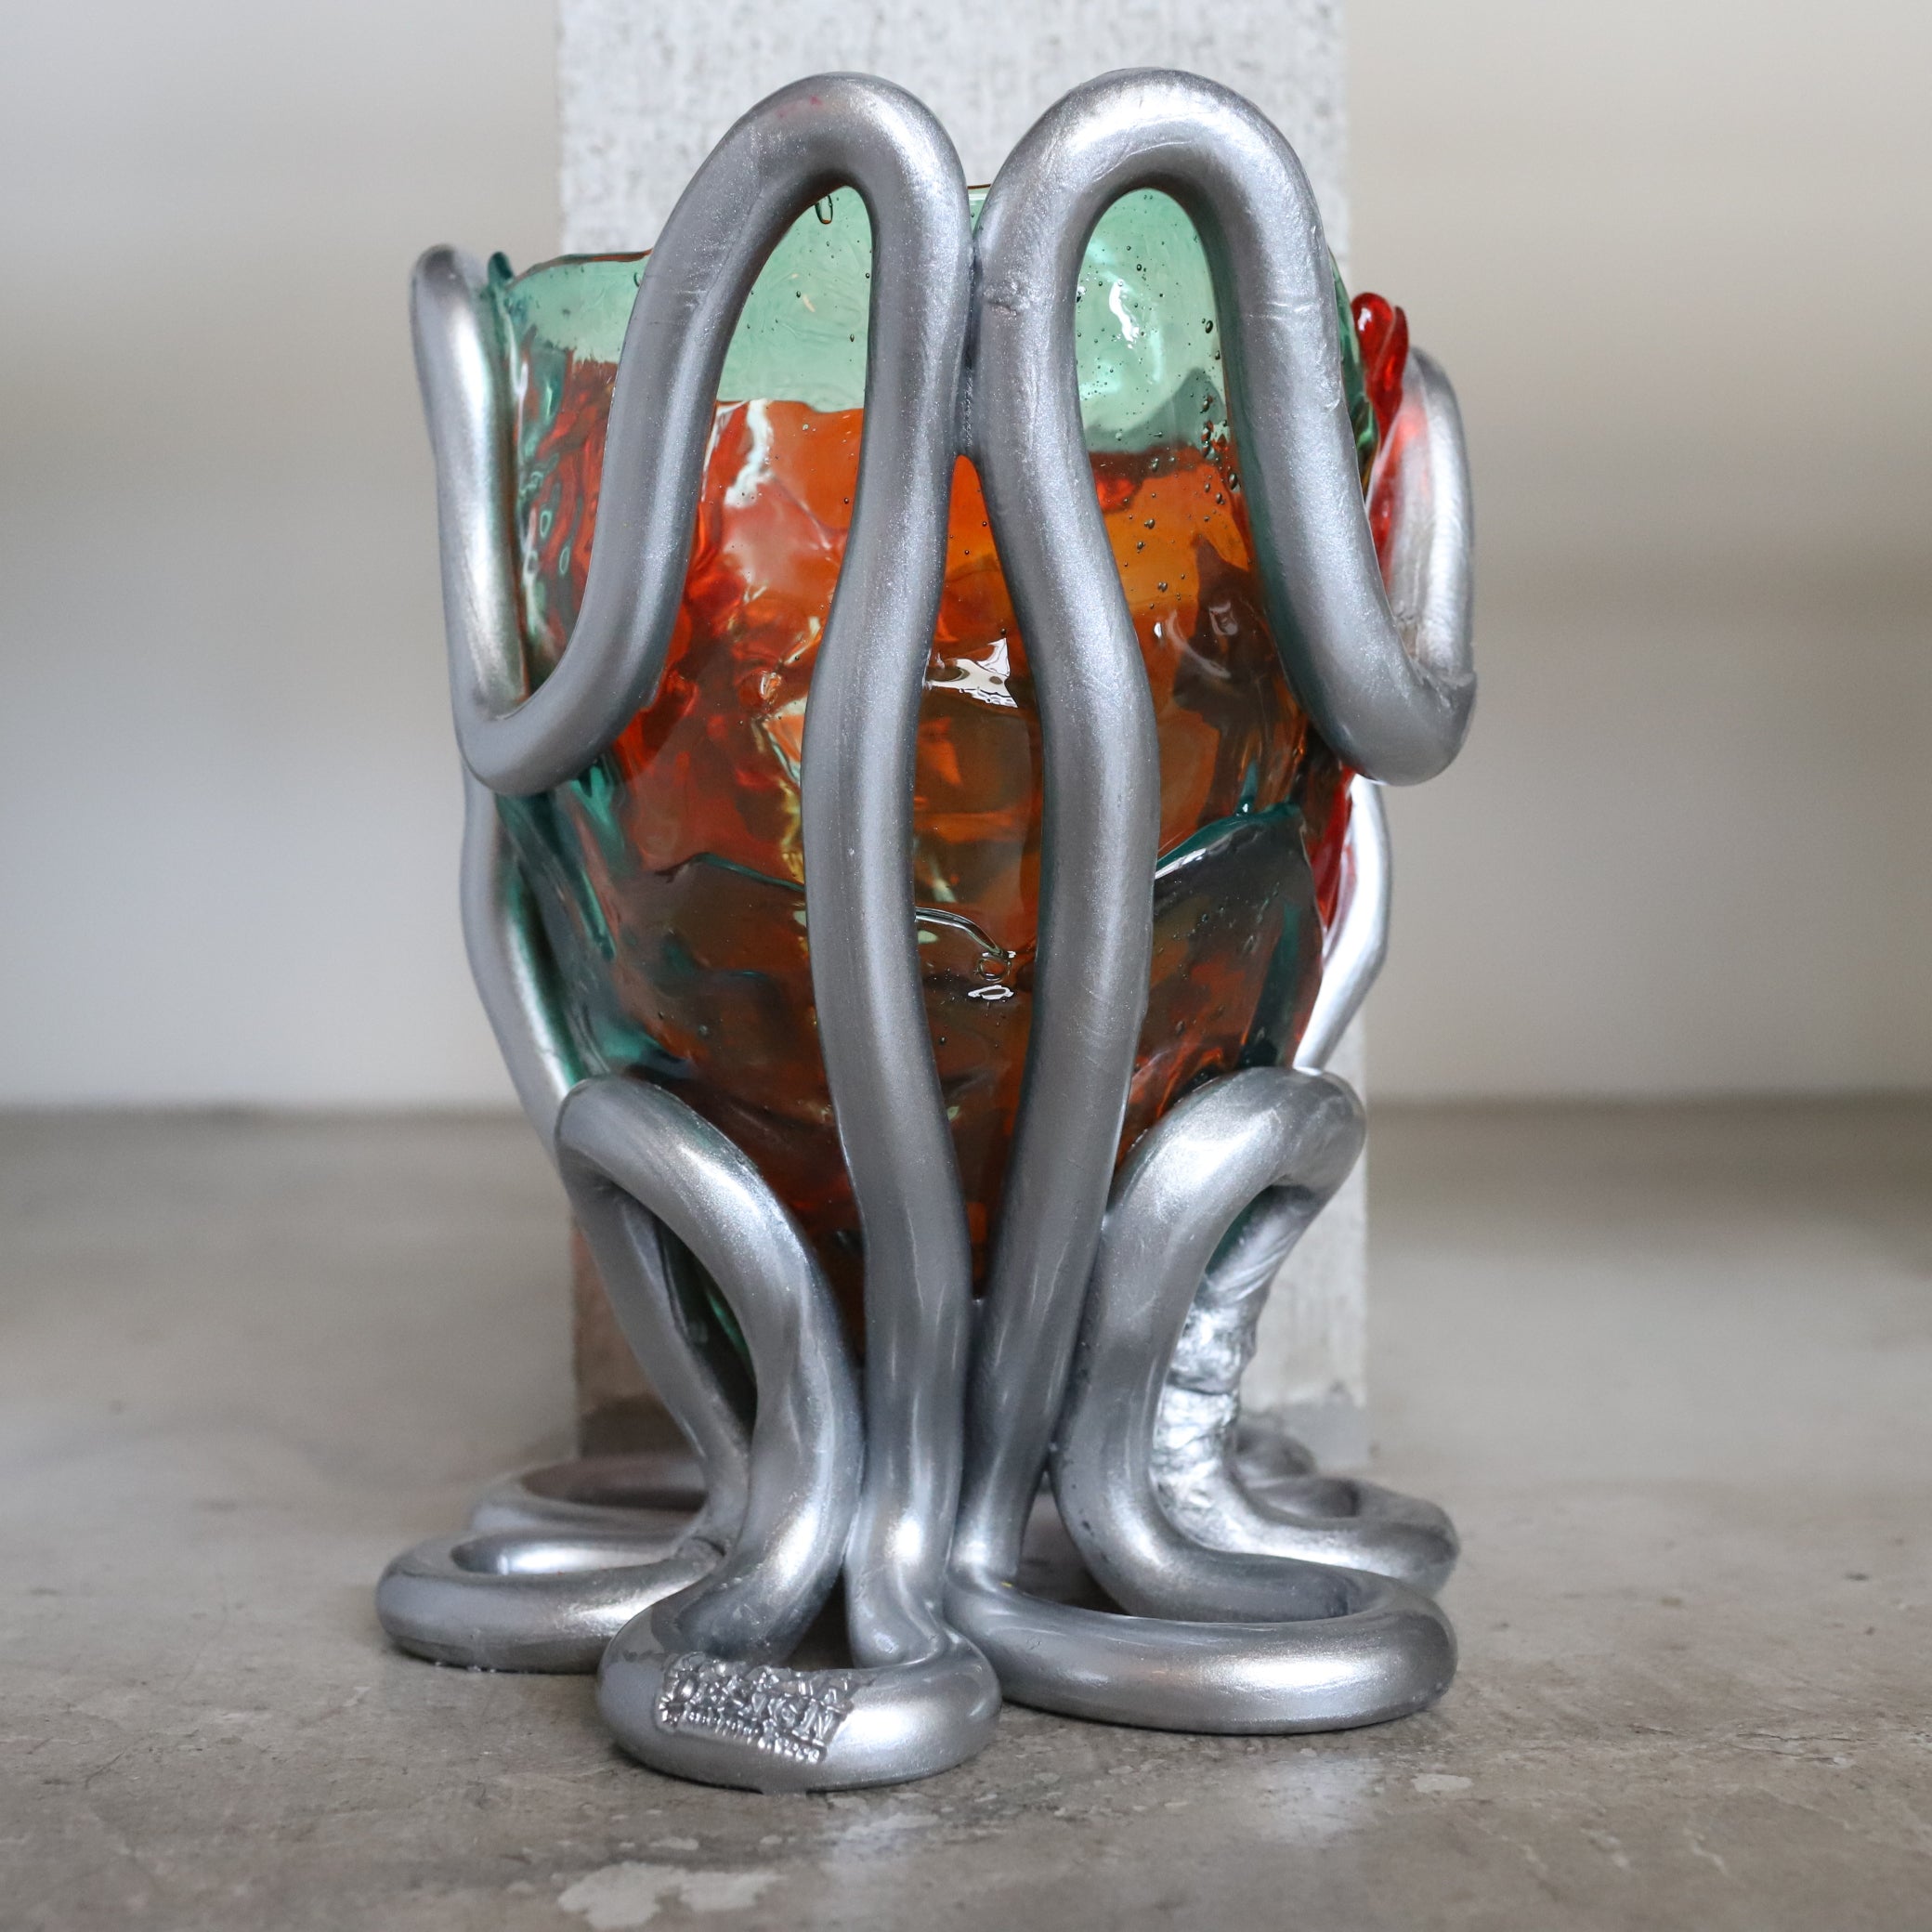 Indian Summer Vase Extra Colour - Fish Design by Gaetano Pesce